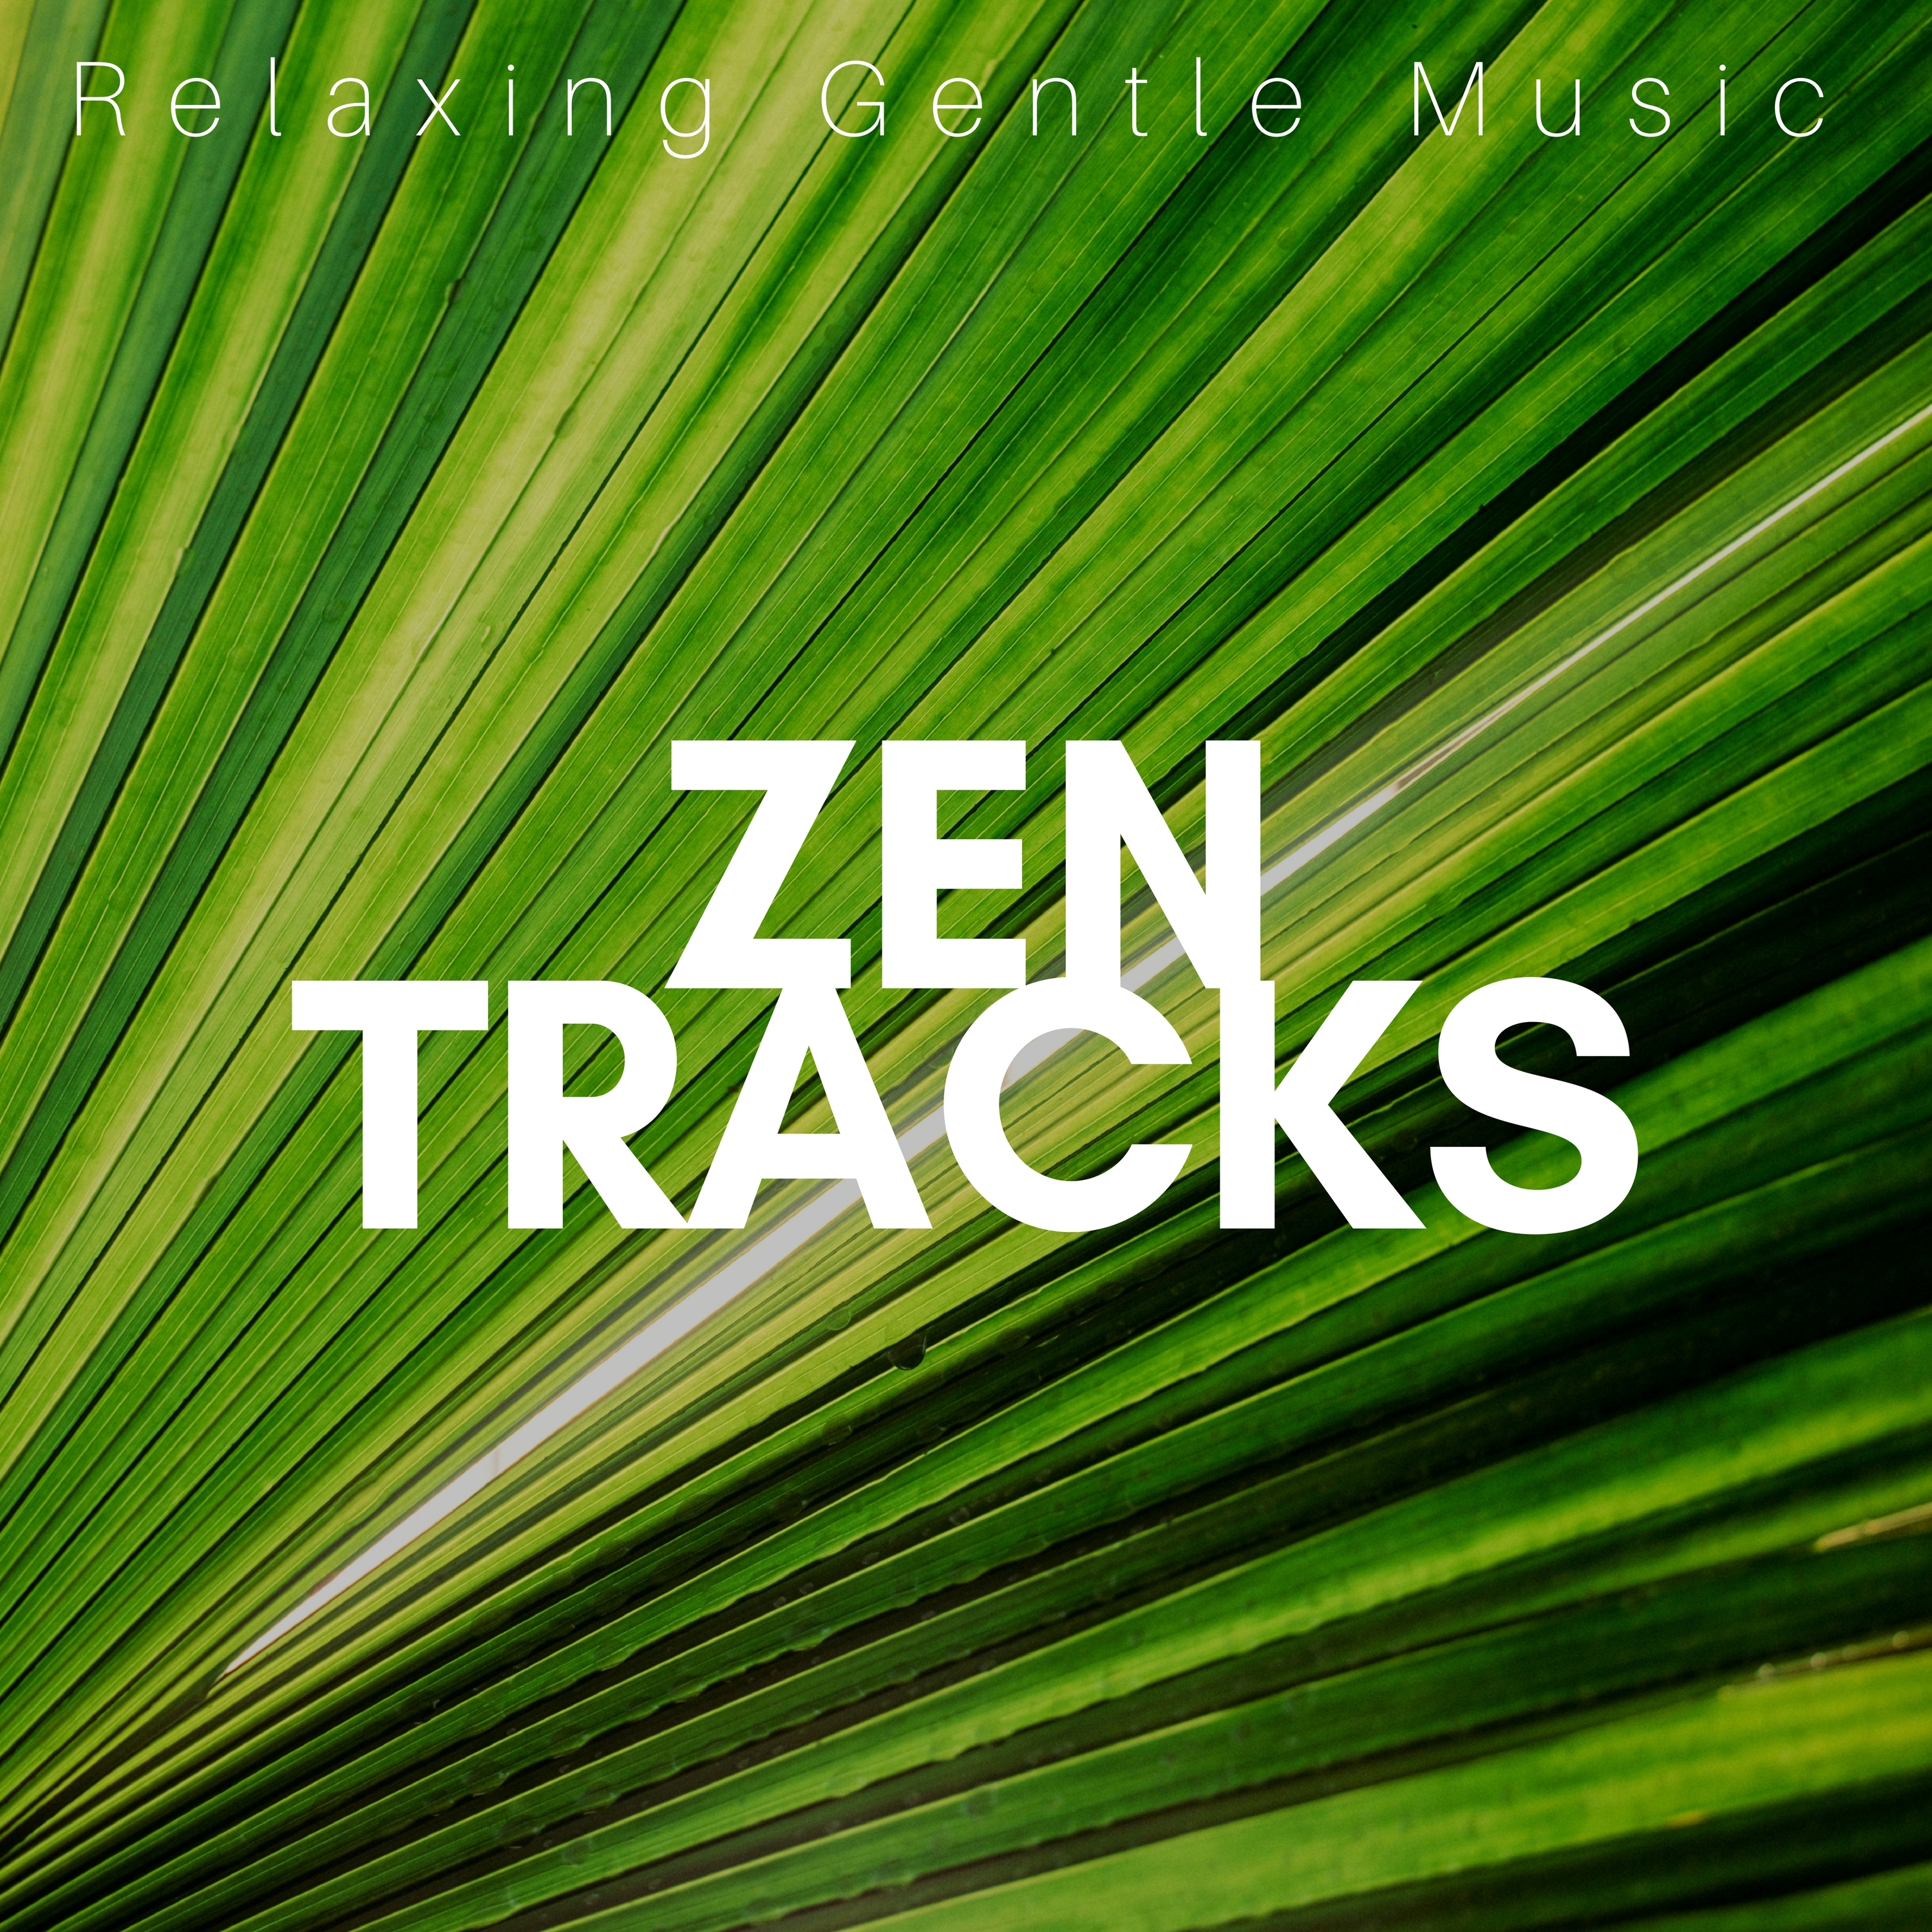 Zen Tracks: Relaxing Gentle Music for Yoga, Massage, Meditation, Relax Time